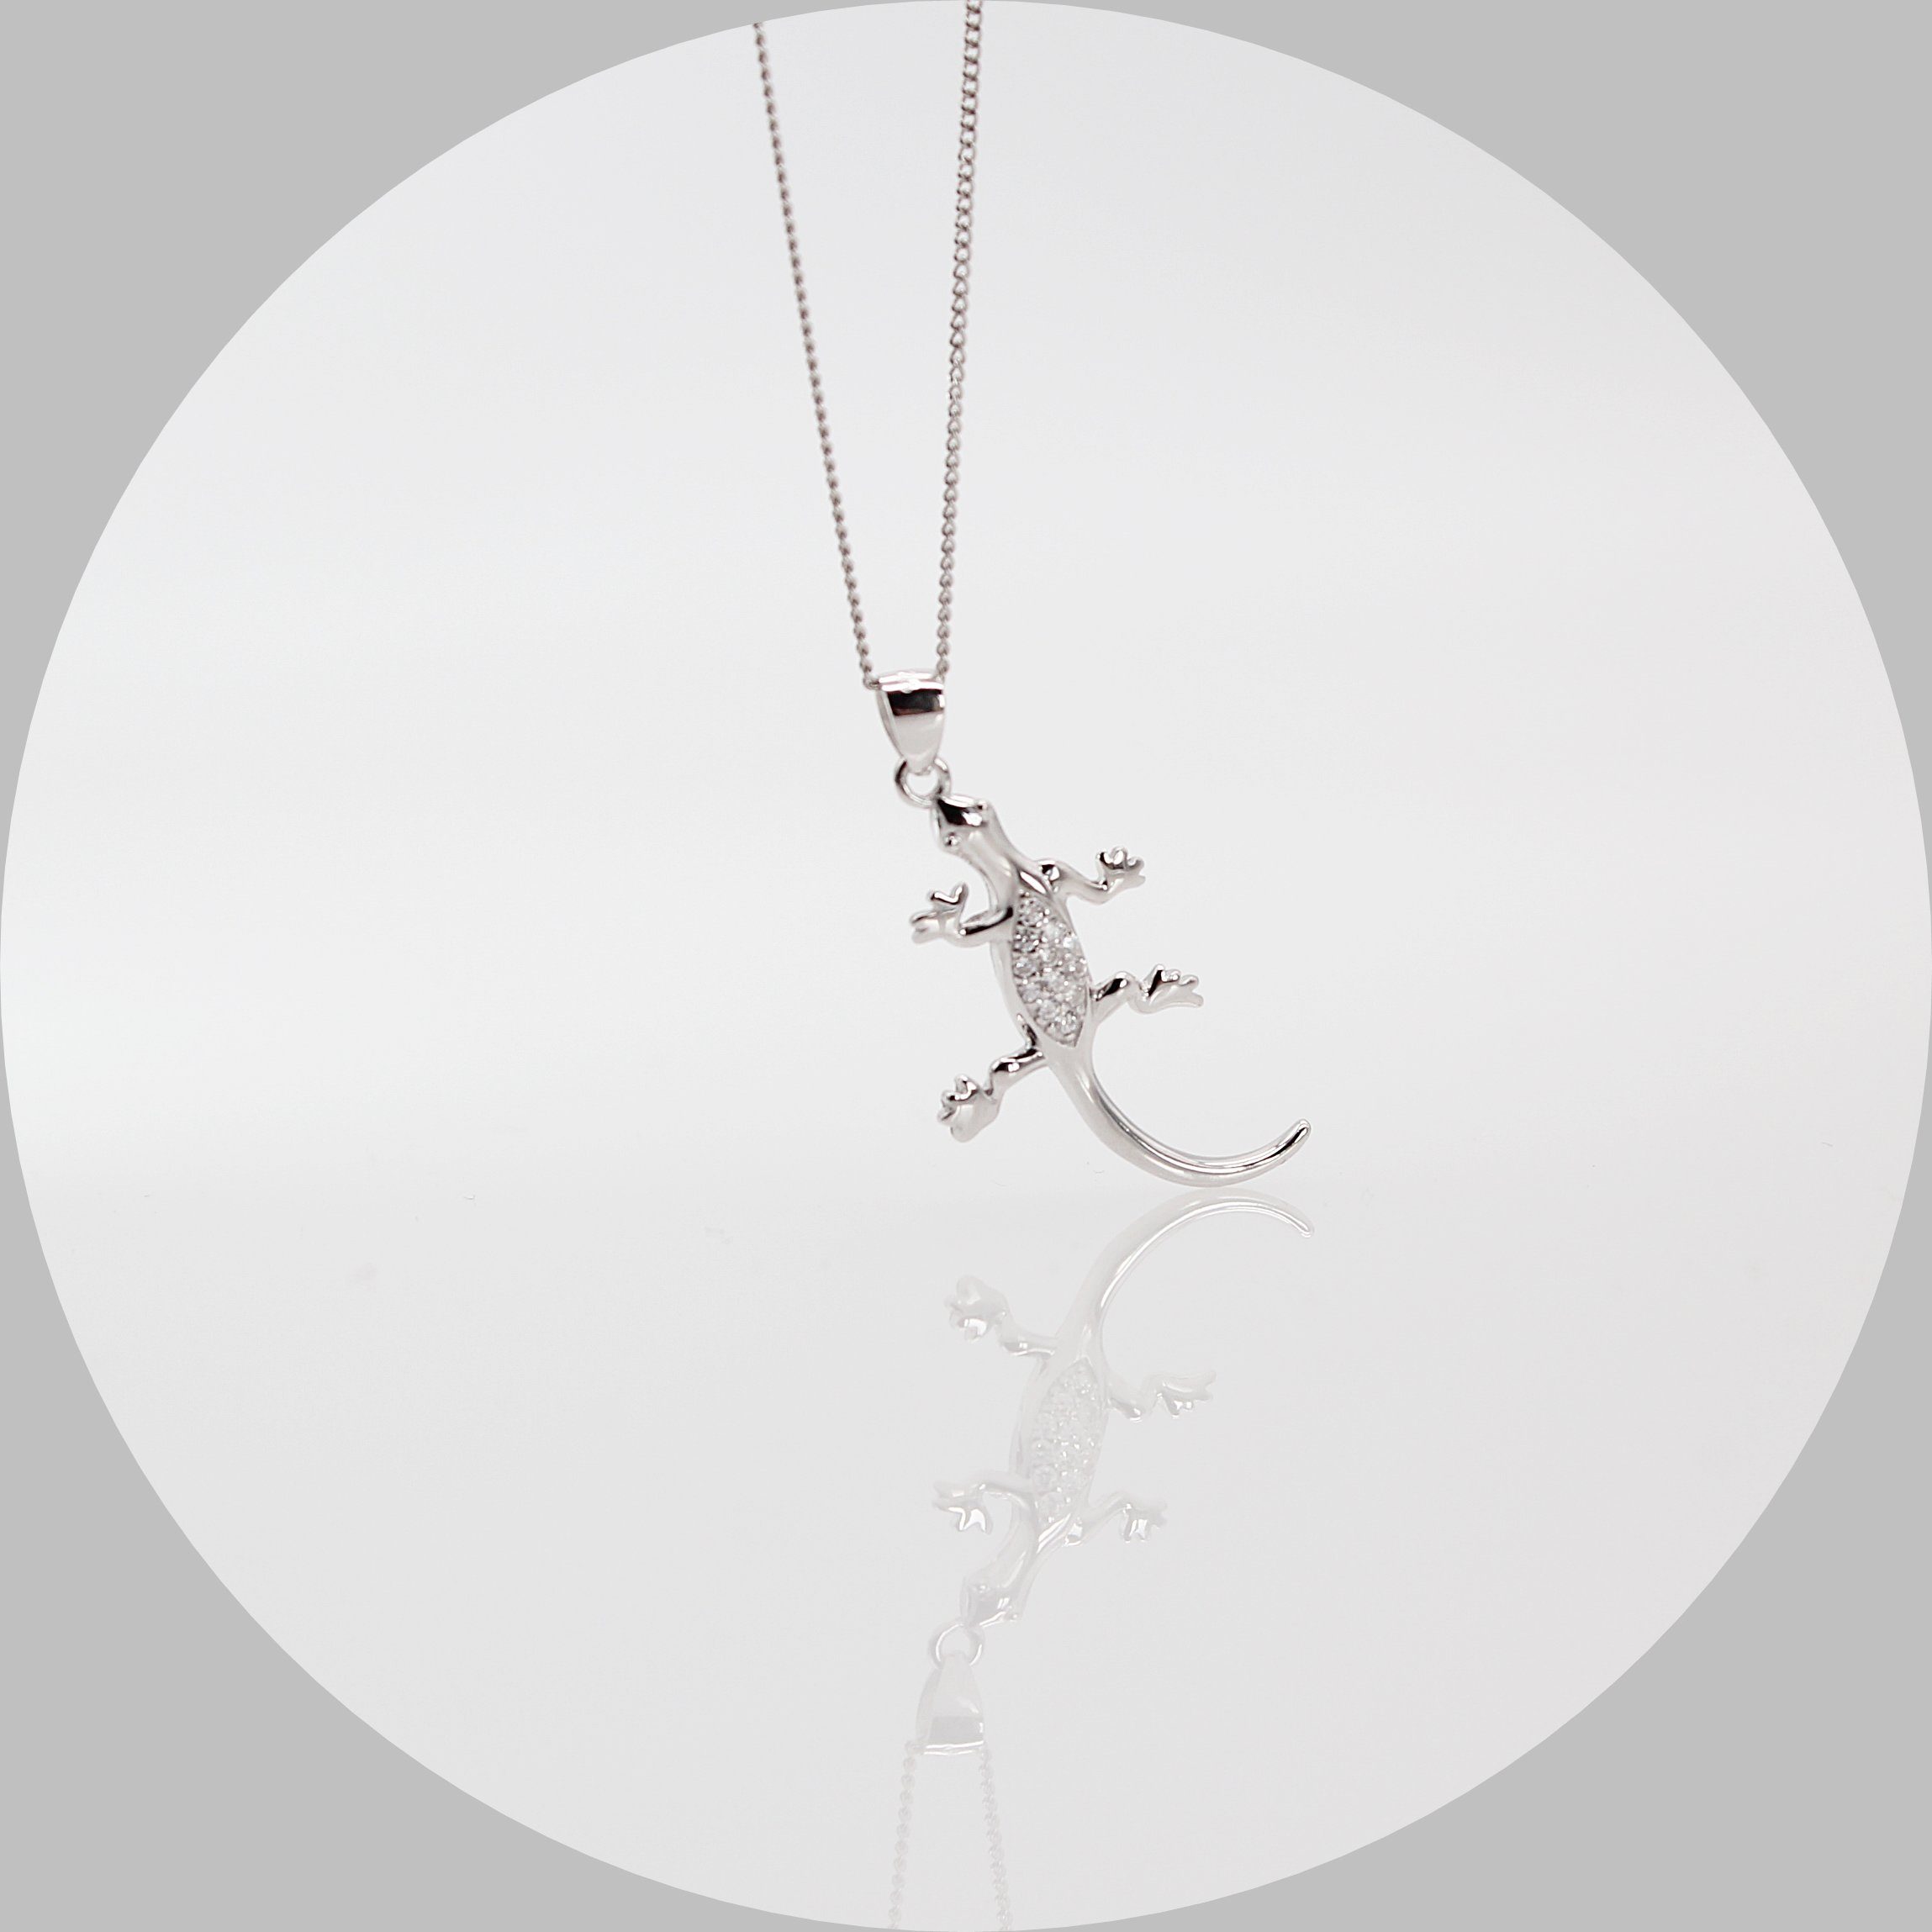 ELLAWIL Silberkette Kette mit Gecko Anhänger Eidechse Echse Halskette mit Tieranhänger (Kettenlänge 40 cm, Sterling Silber 925), inklusive Geschenkschachtel | Silberketten